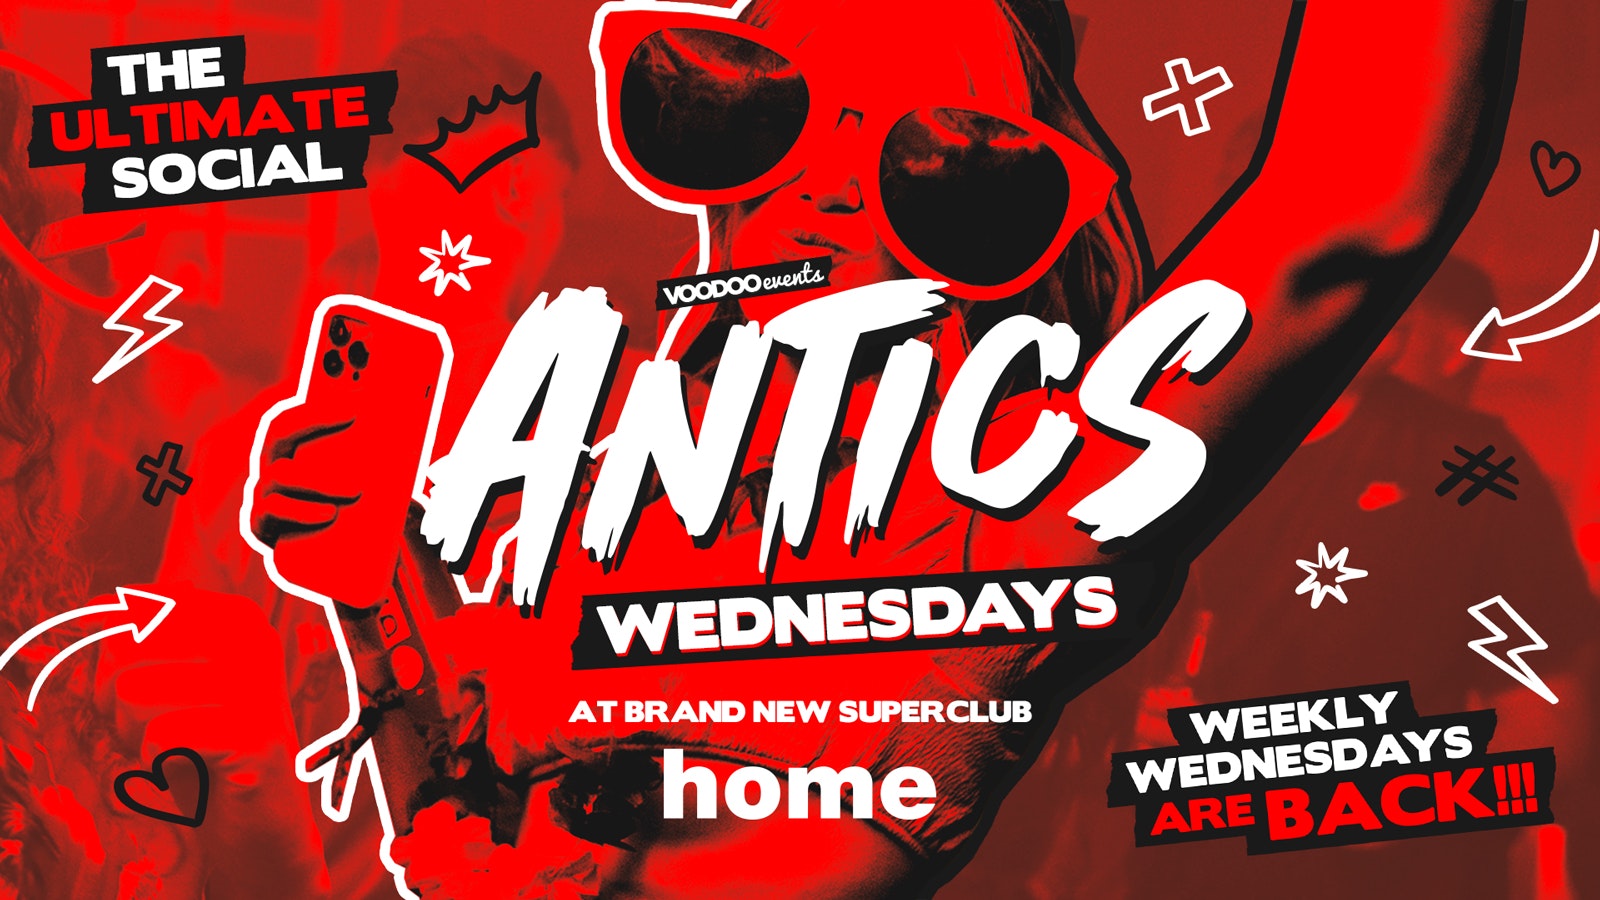 Antics @ THE BRAND NEW SUPER CLUB HOME – Wednesday 26th June